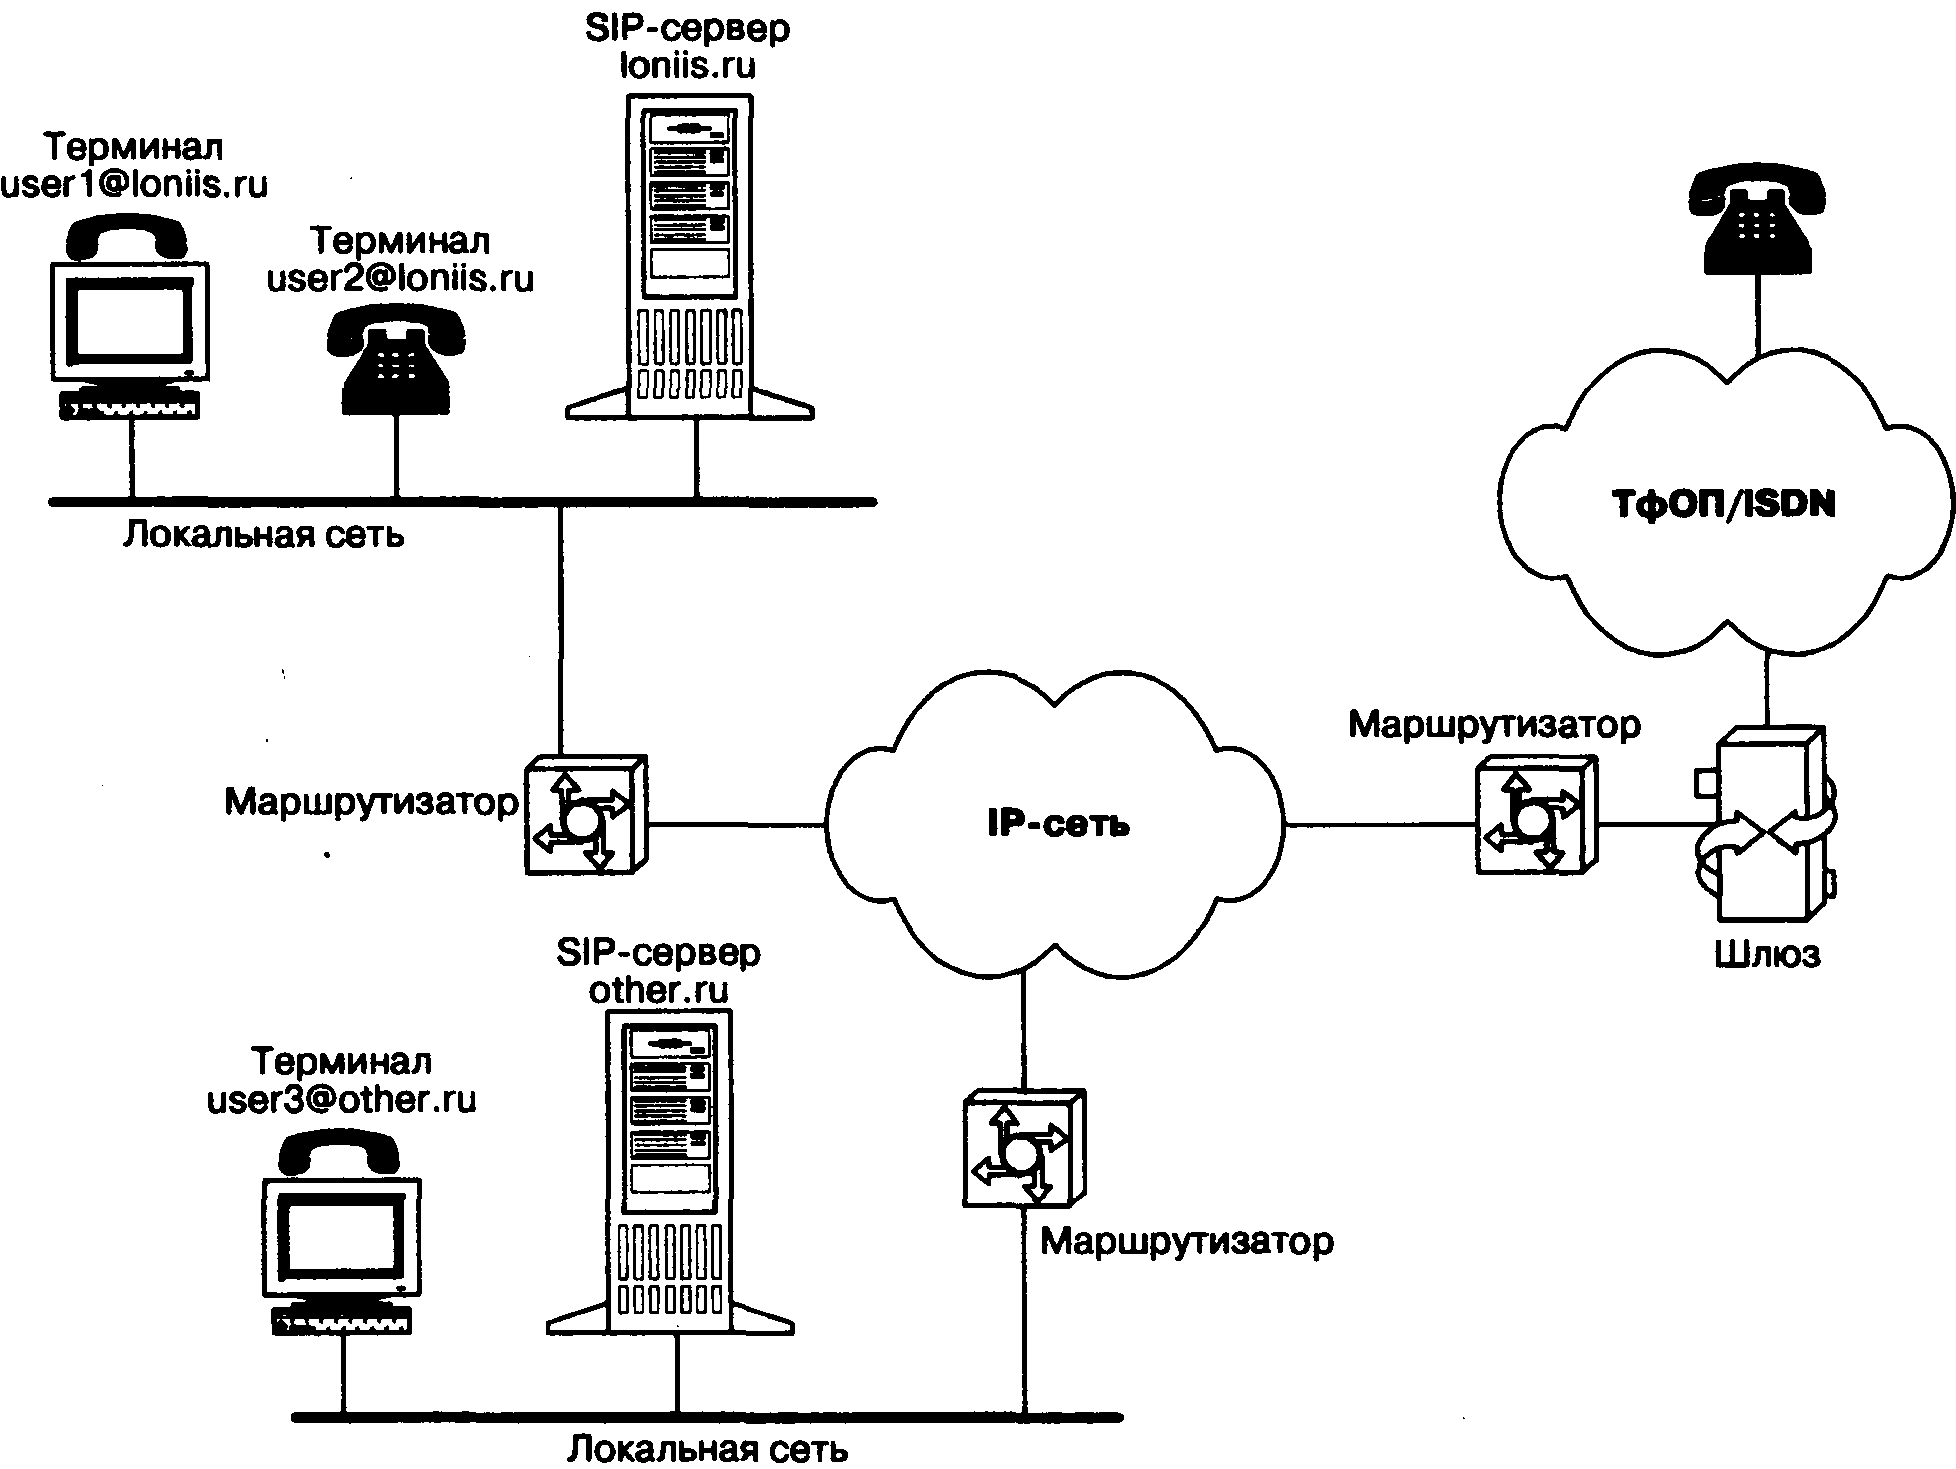 Протокол терминала